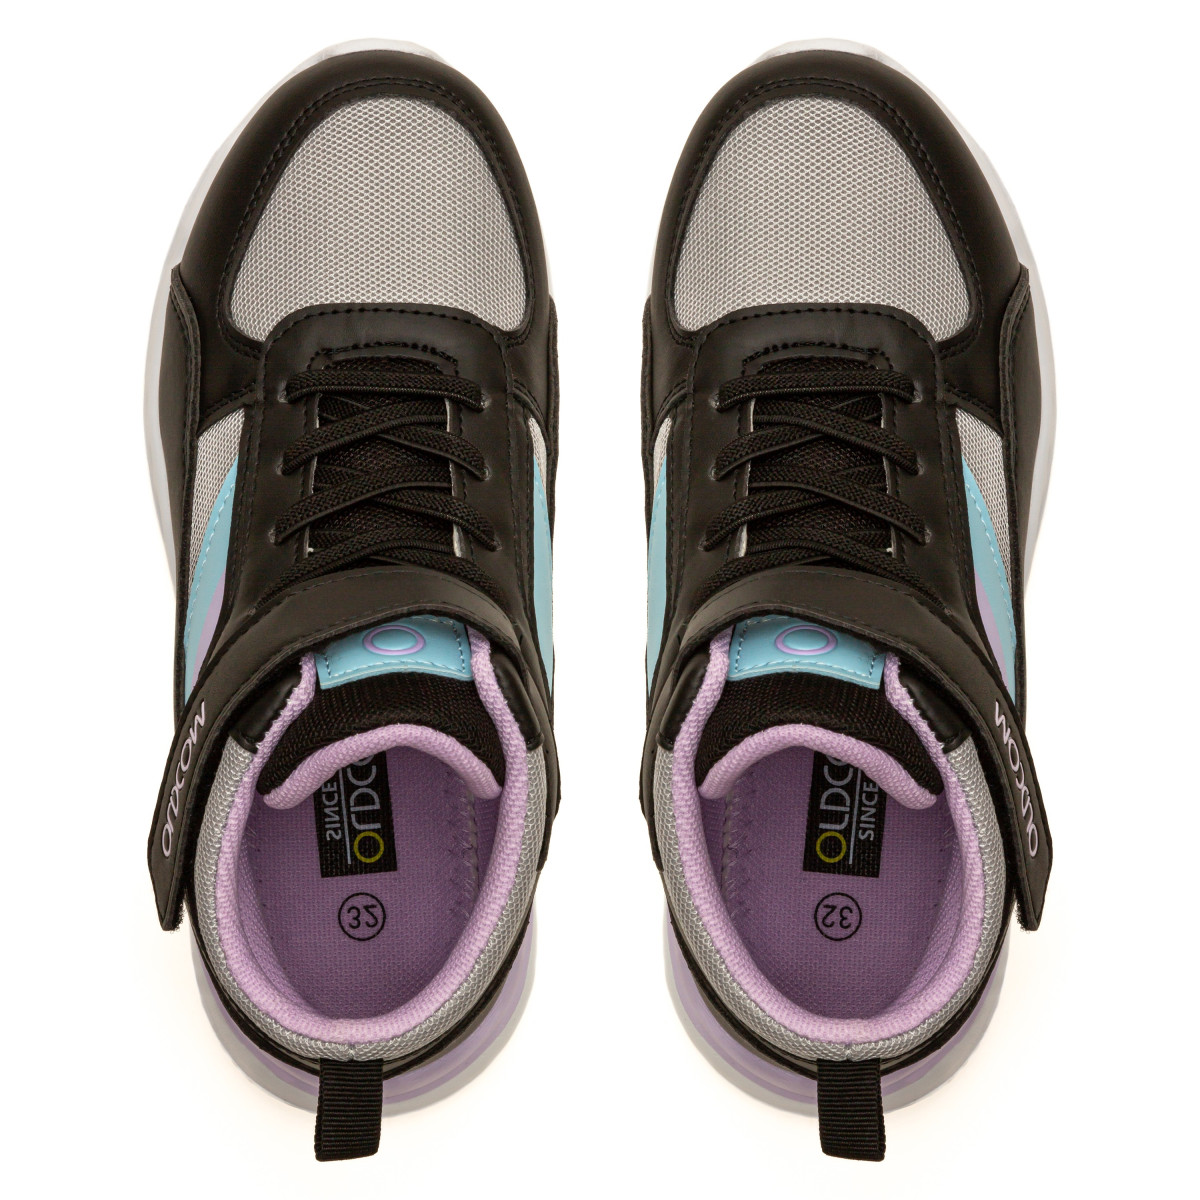 Kids' Sports Shoes Old Skool, Black/Purple